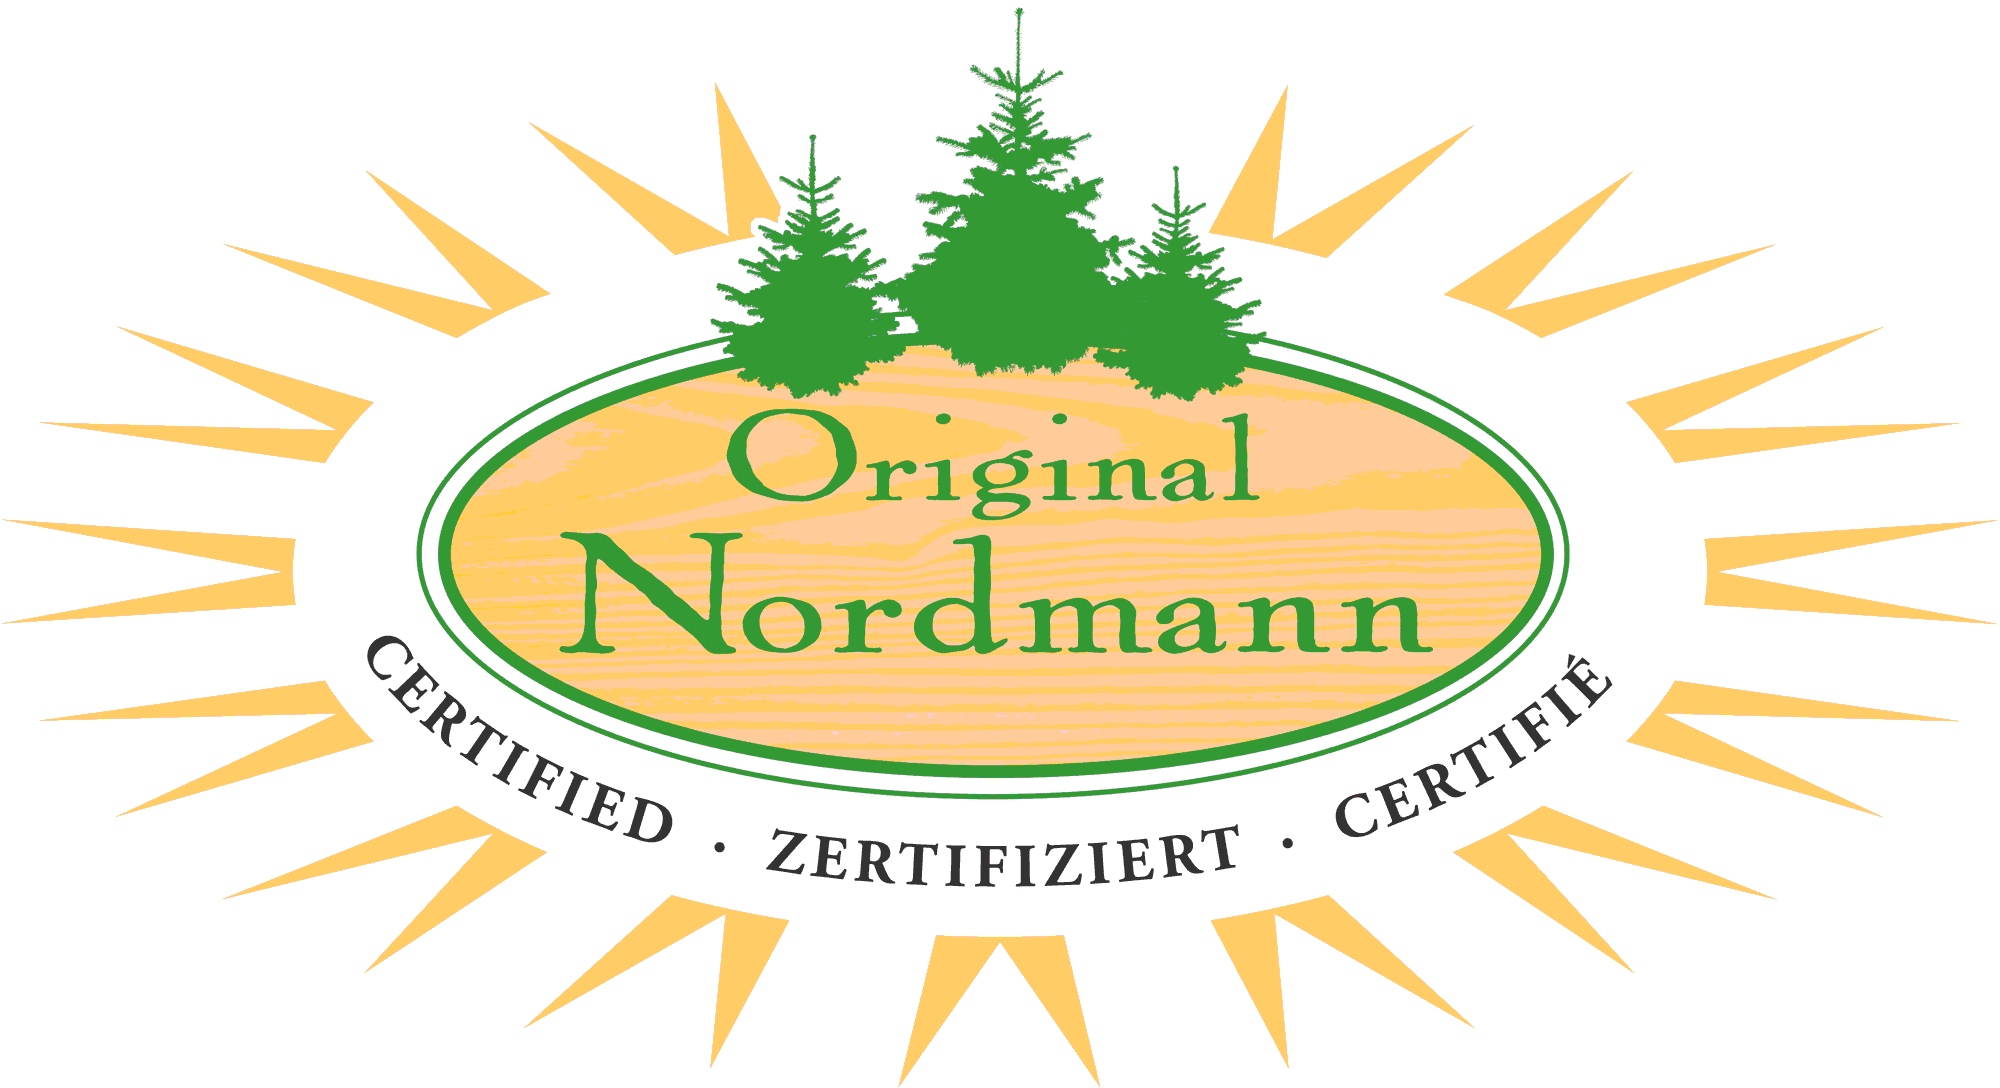 Certified Original Nordmann grower/wholesaler